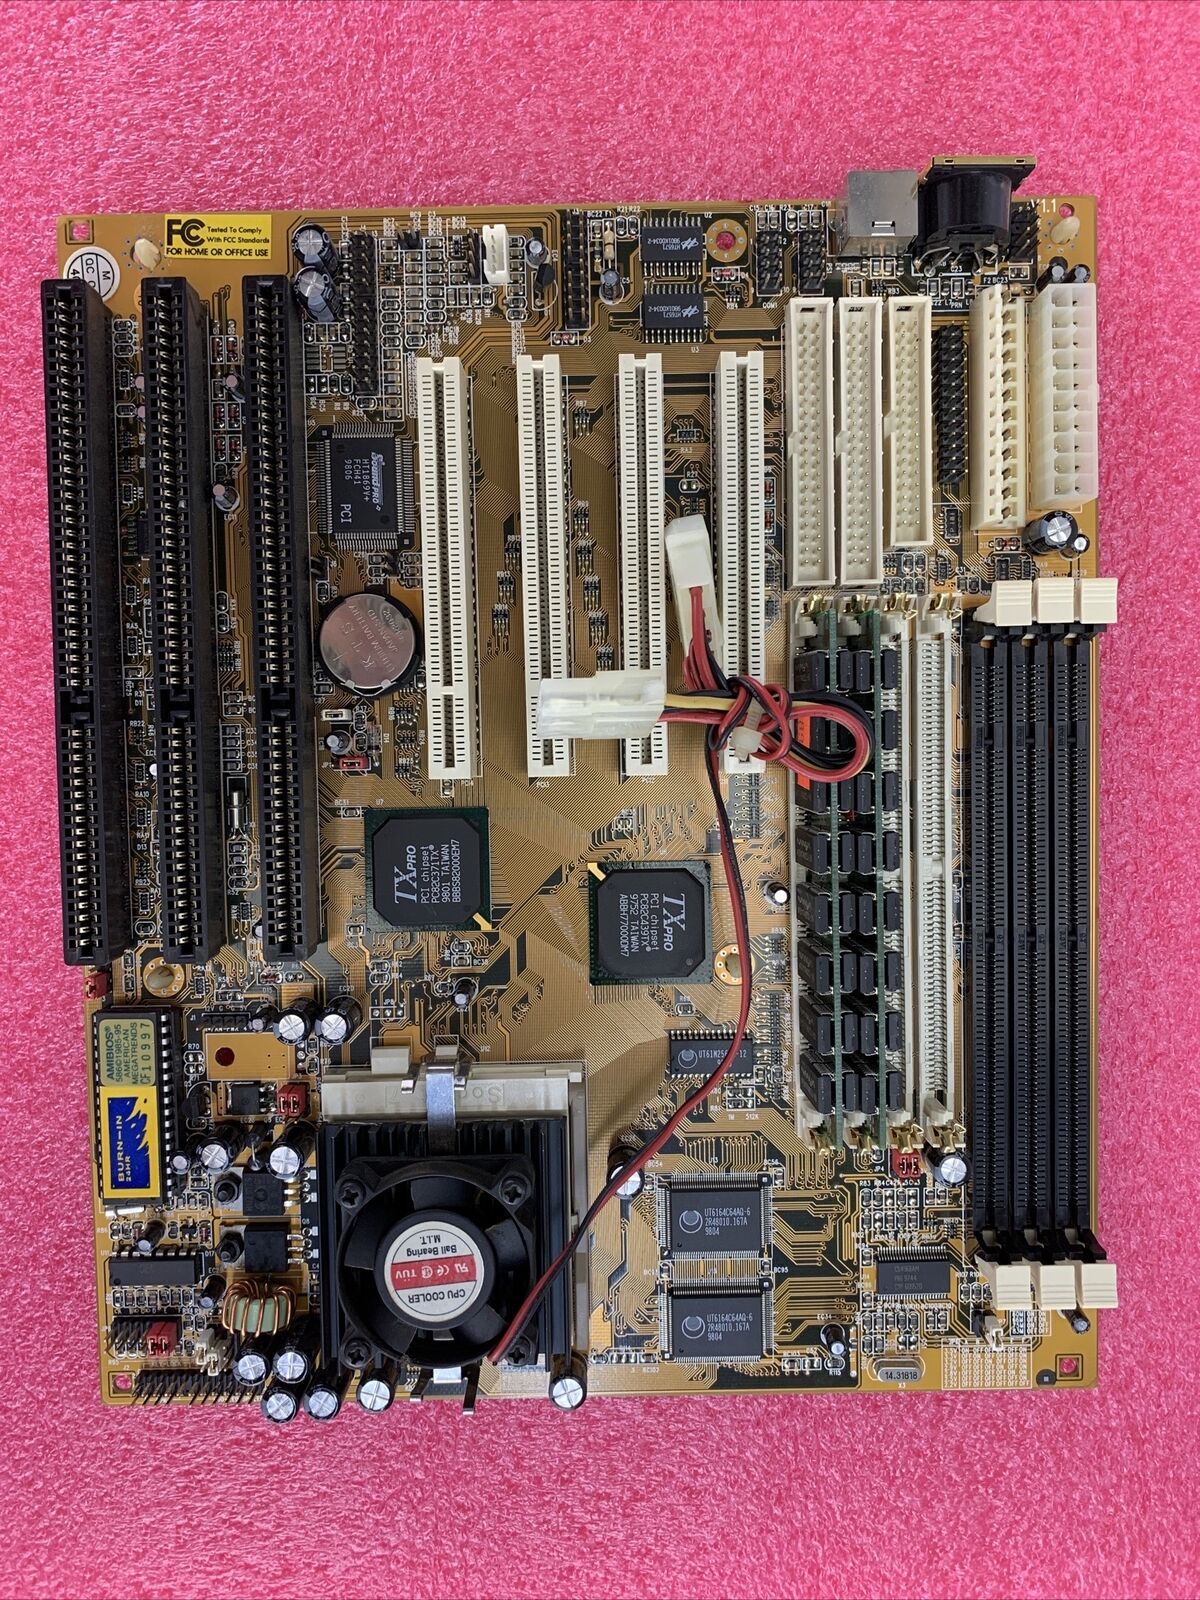 PC Chips M575 Motherboard Intel Pentium MMX 200MHz 64MB RAM 3x ISA